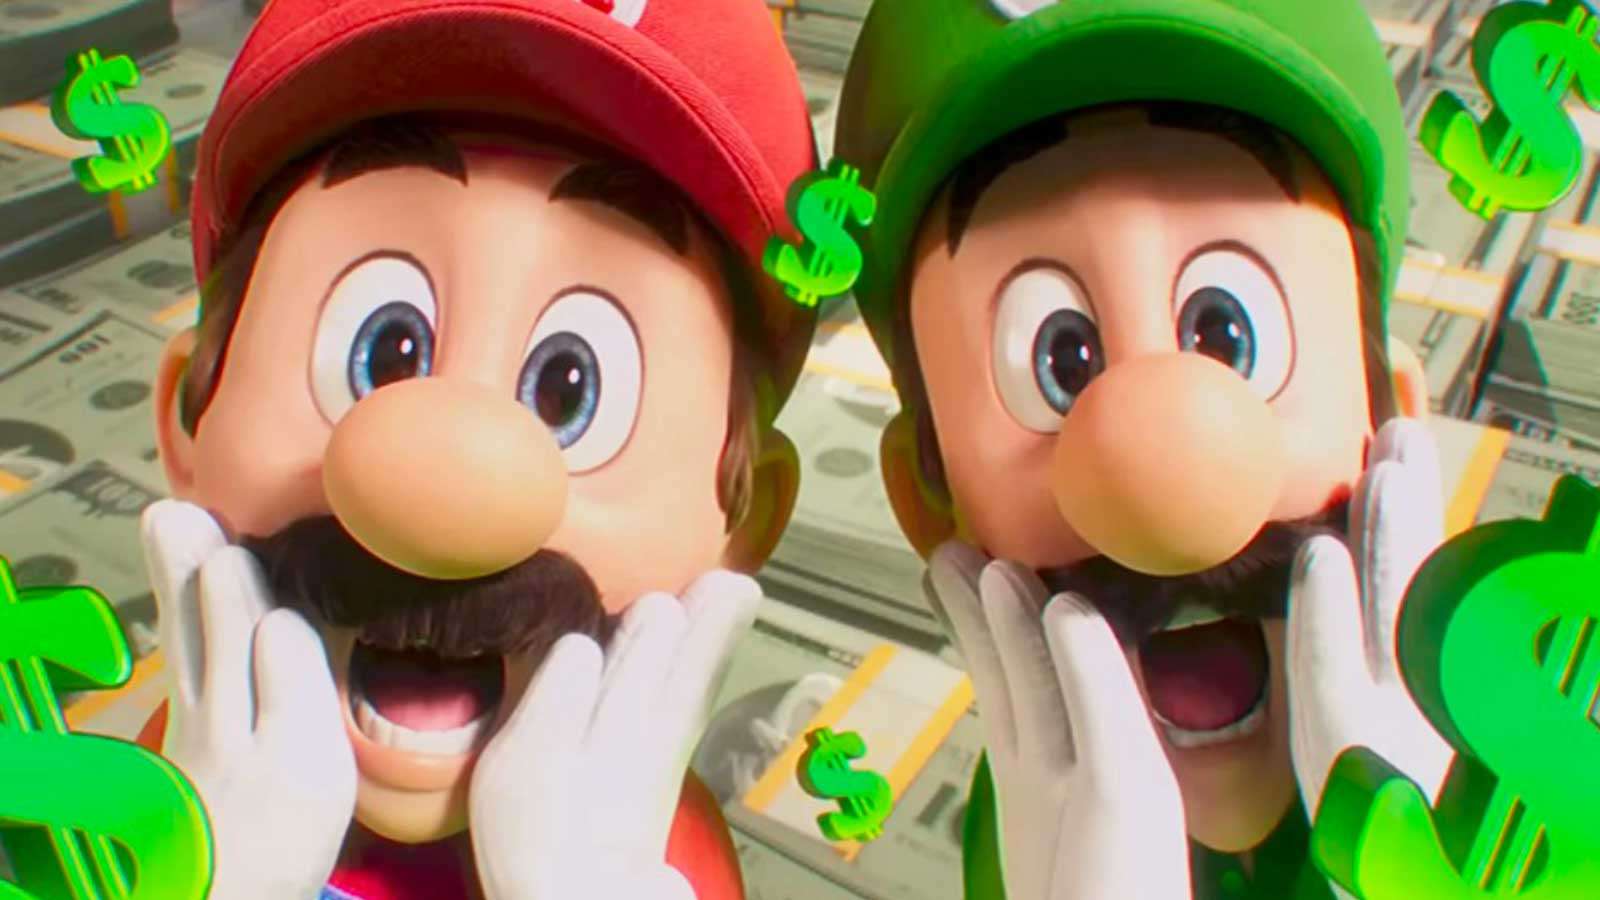 Mario and Luigi shocked by money